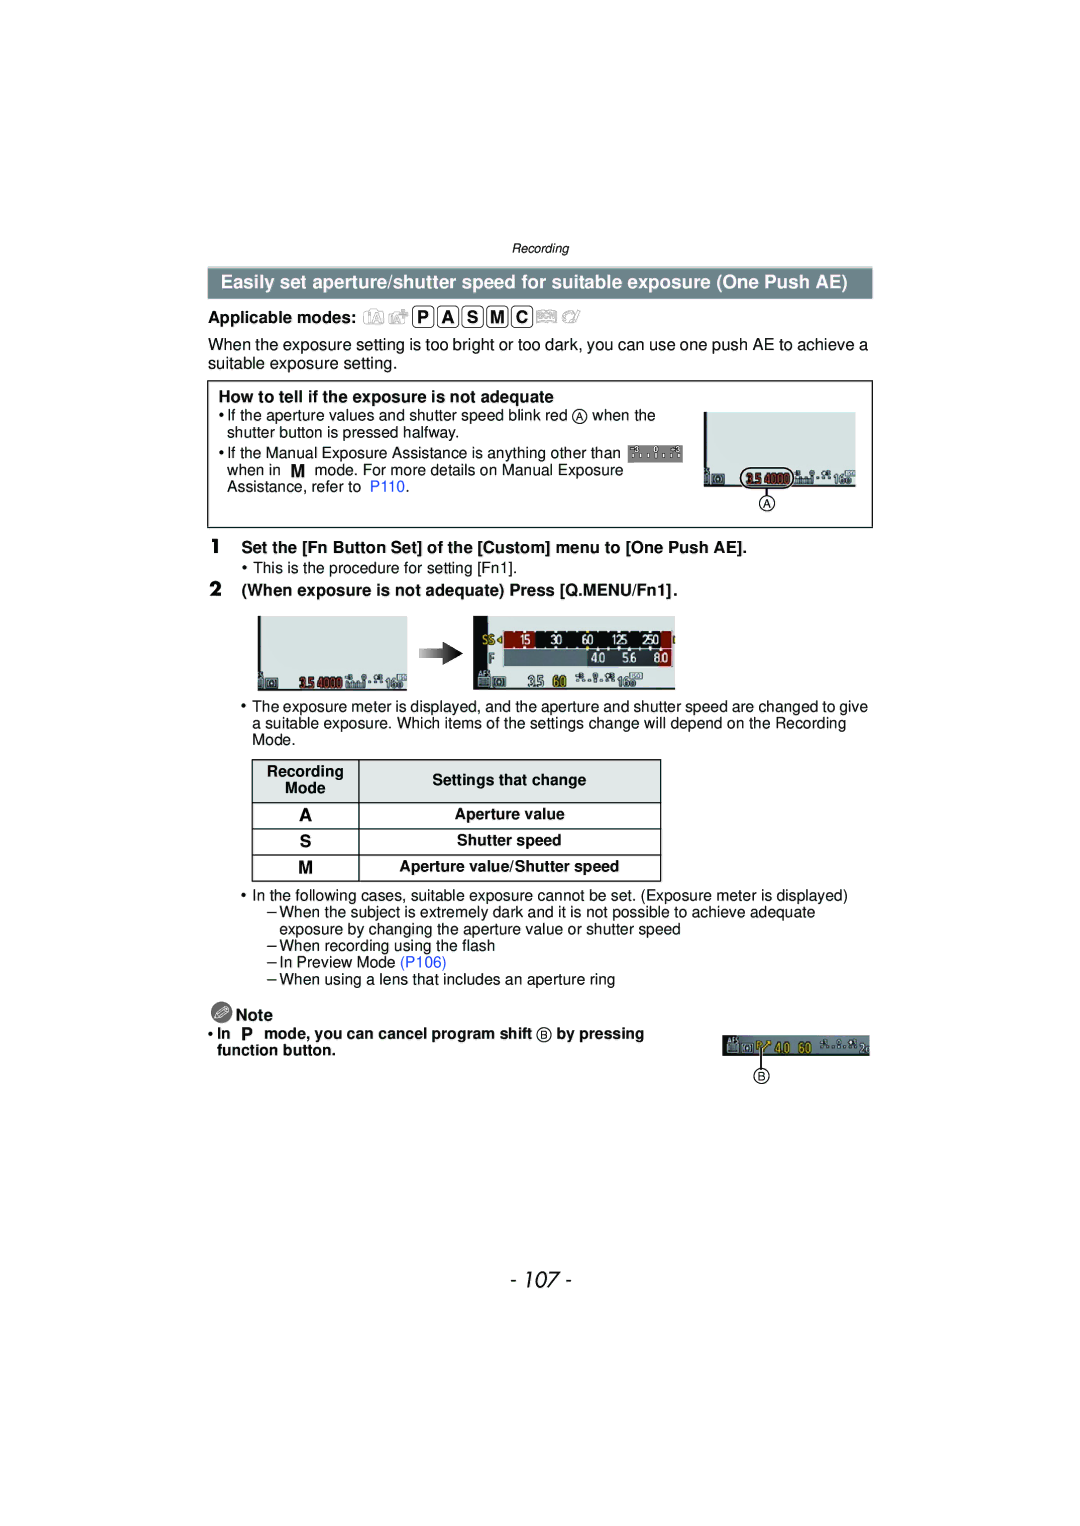 Panasonic DMC-GF5 107, How to tell if the exposure is not adequate, When exposure is not adequate Press Q.MENU/Fn1 